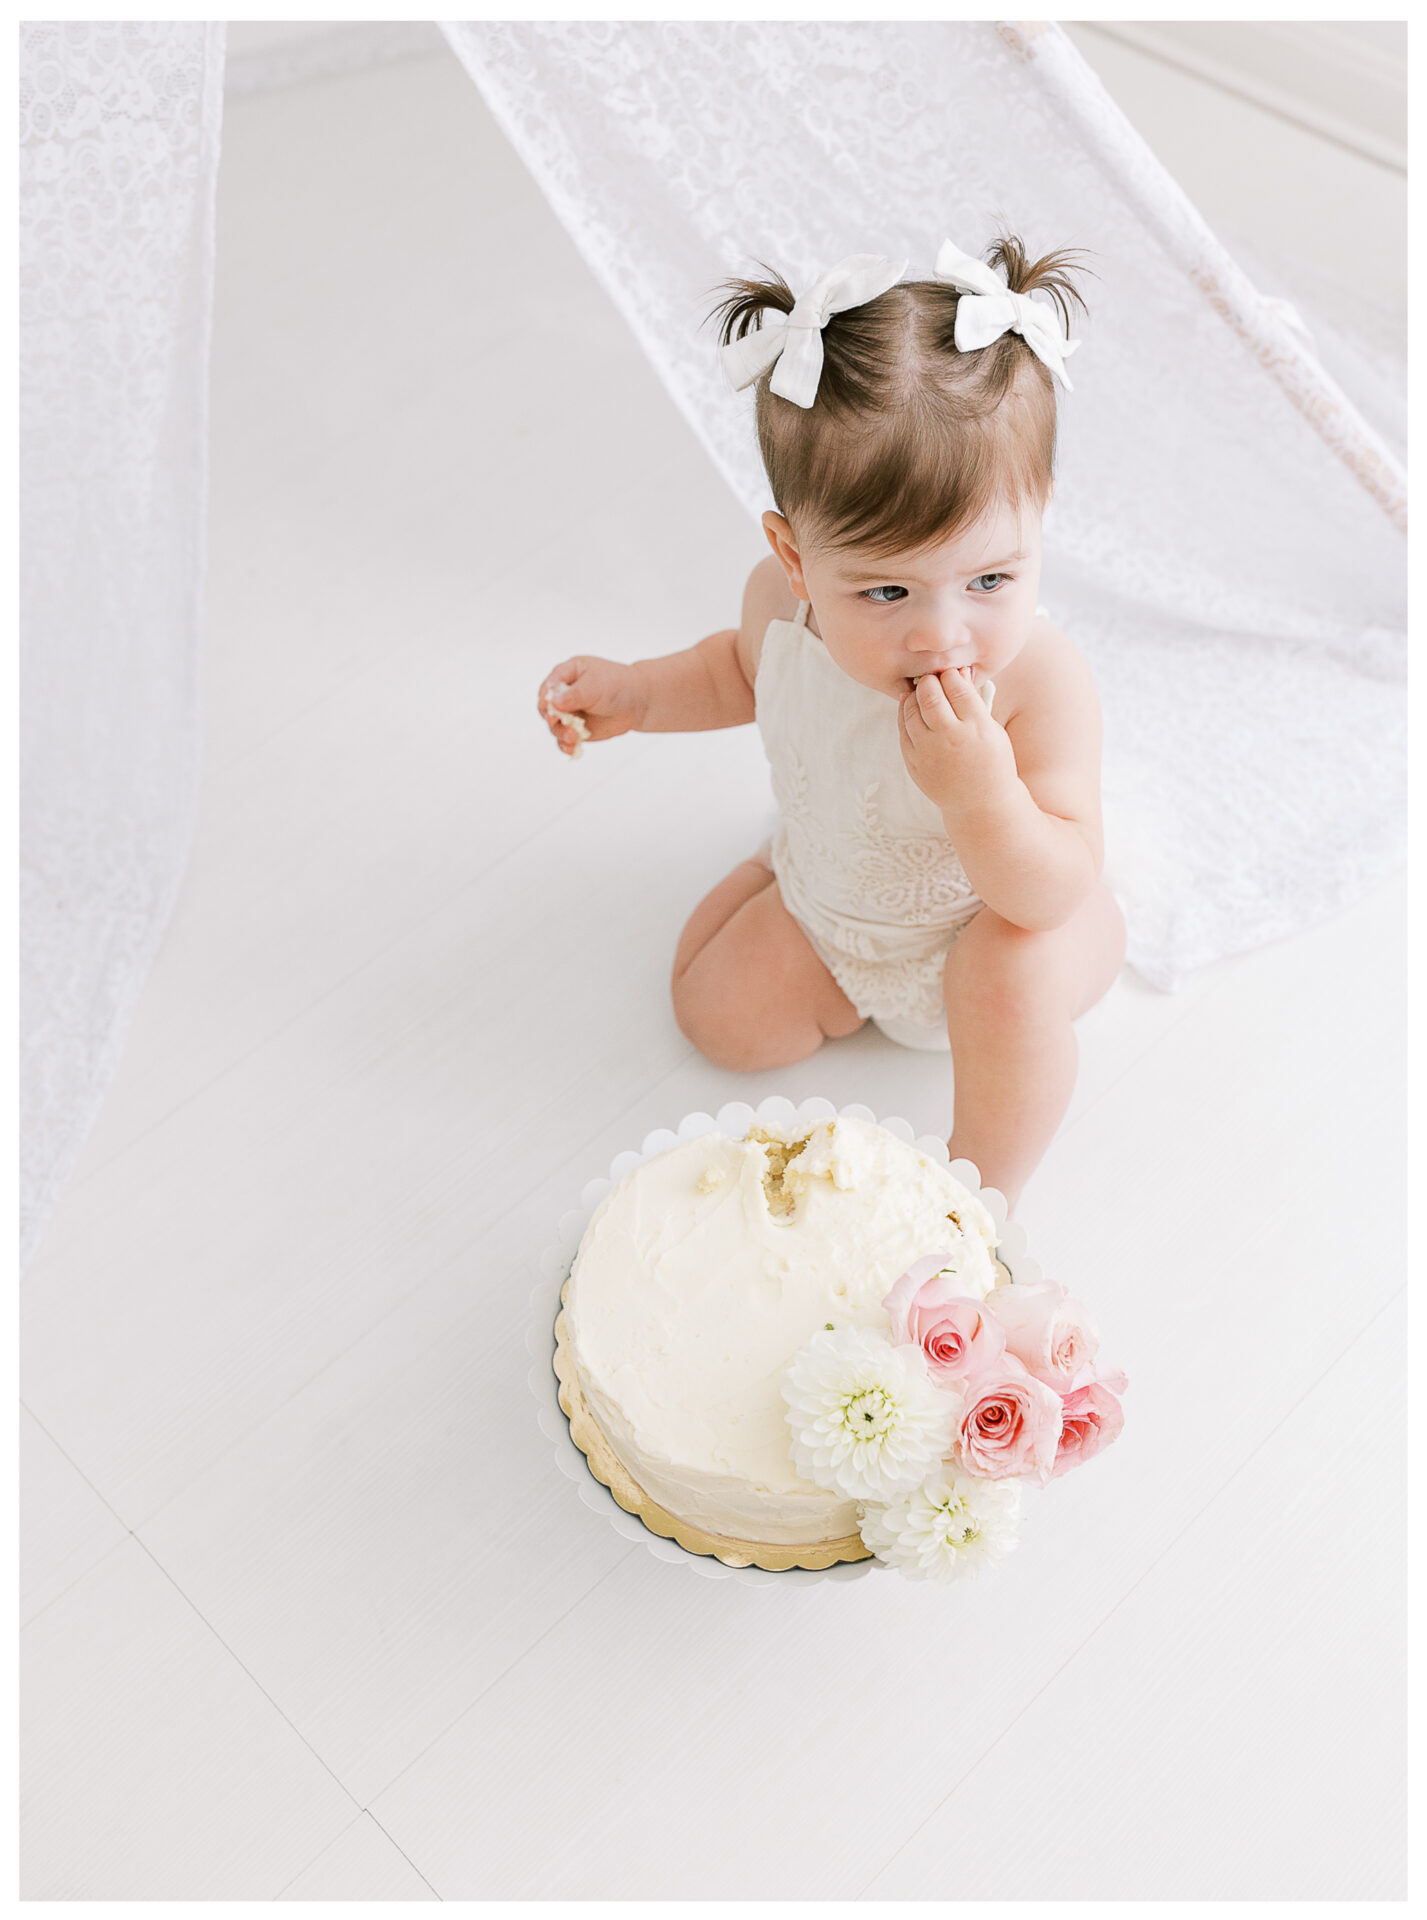 Winter Freire Photography | First Birthday Baby Milestone Photography | Natural Light Photography Studio Dayton, Ohio